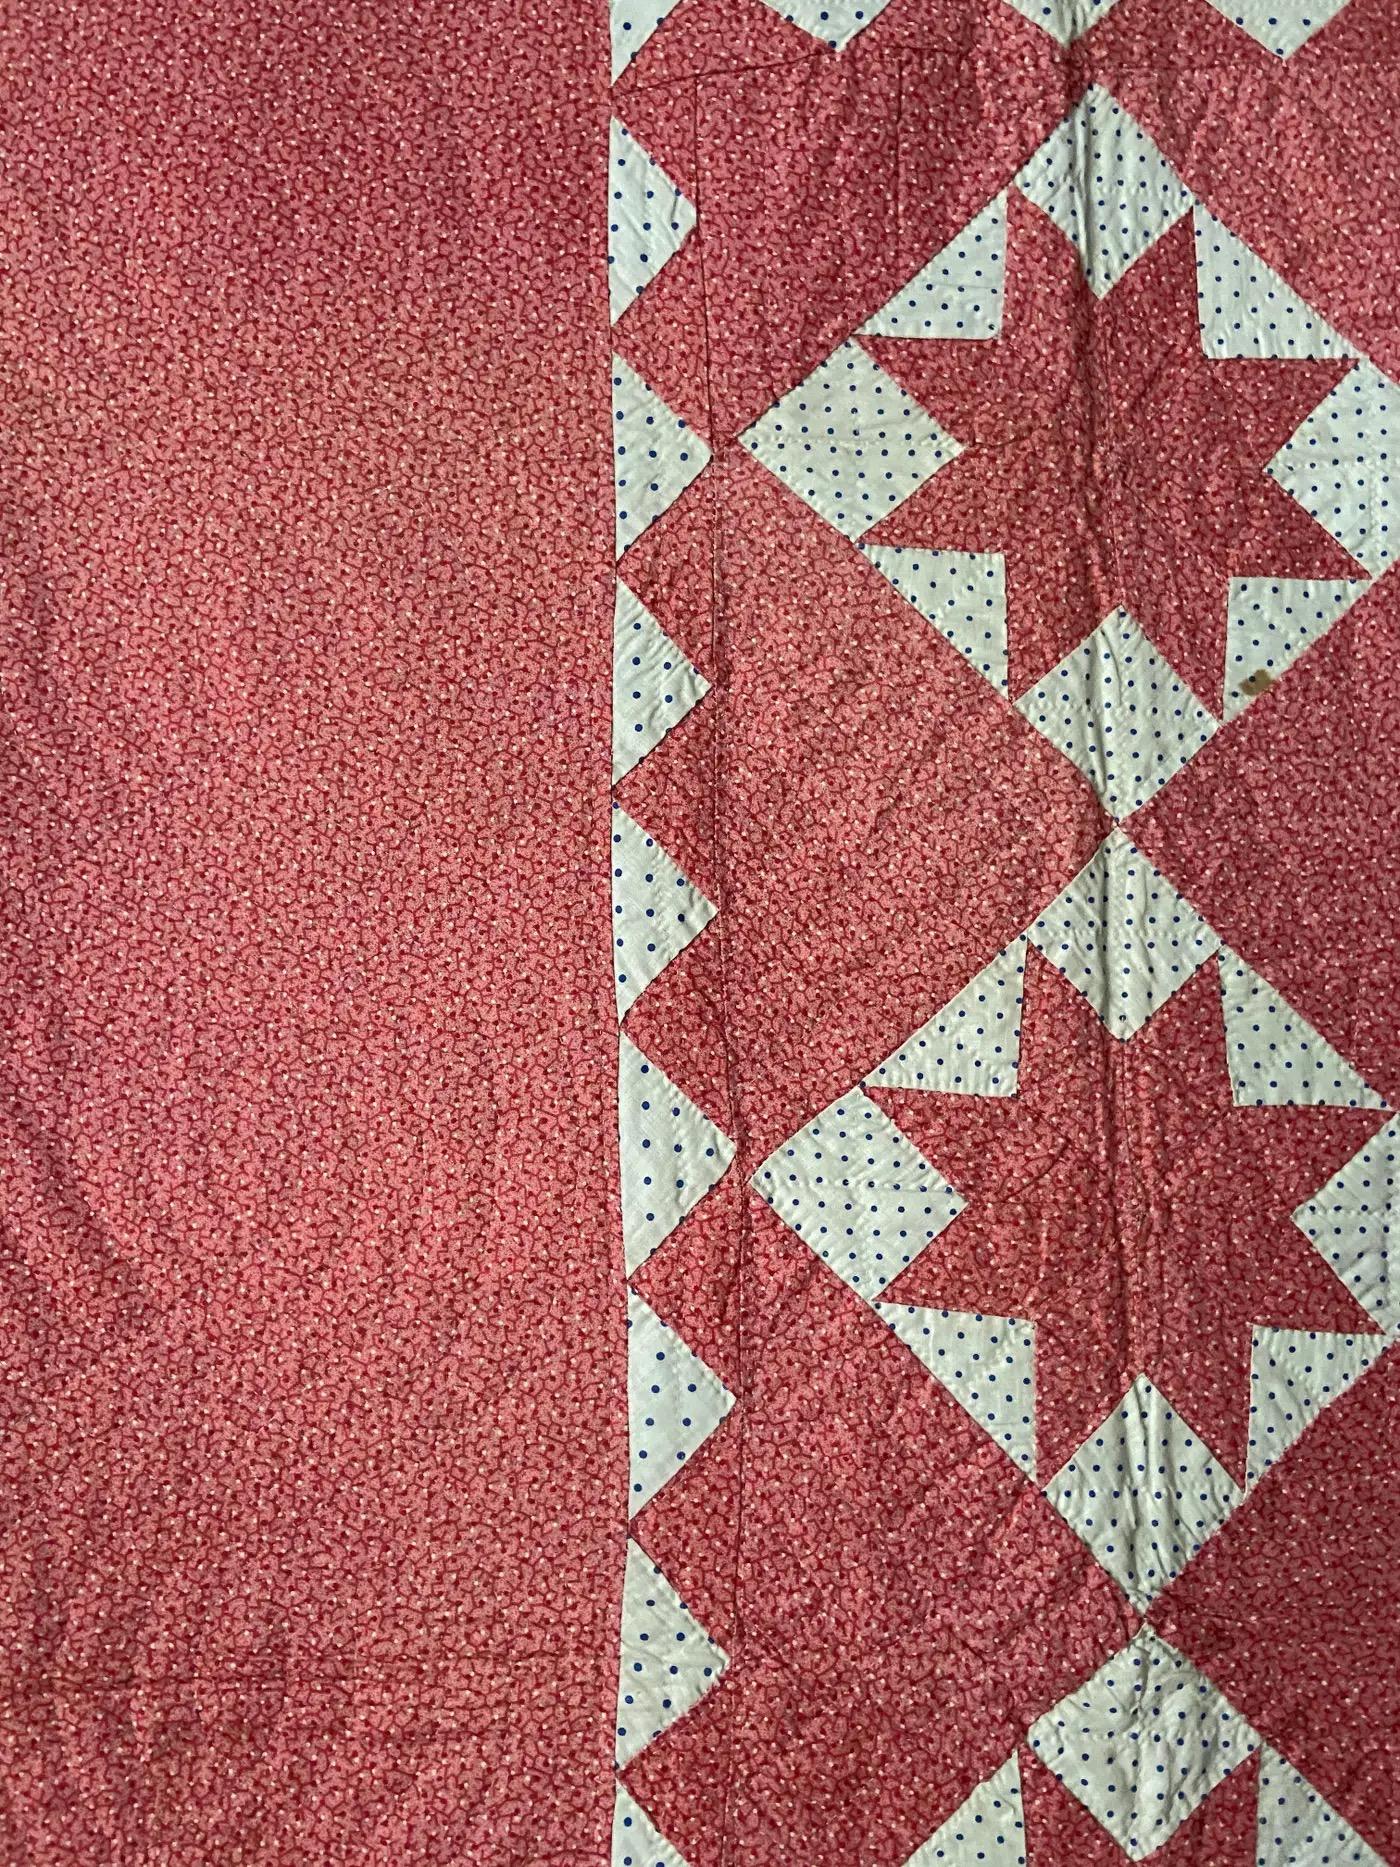 Antique Patchwork Quilt 